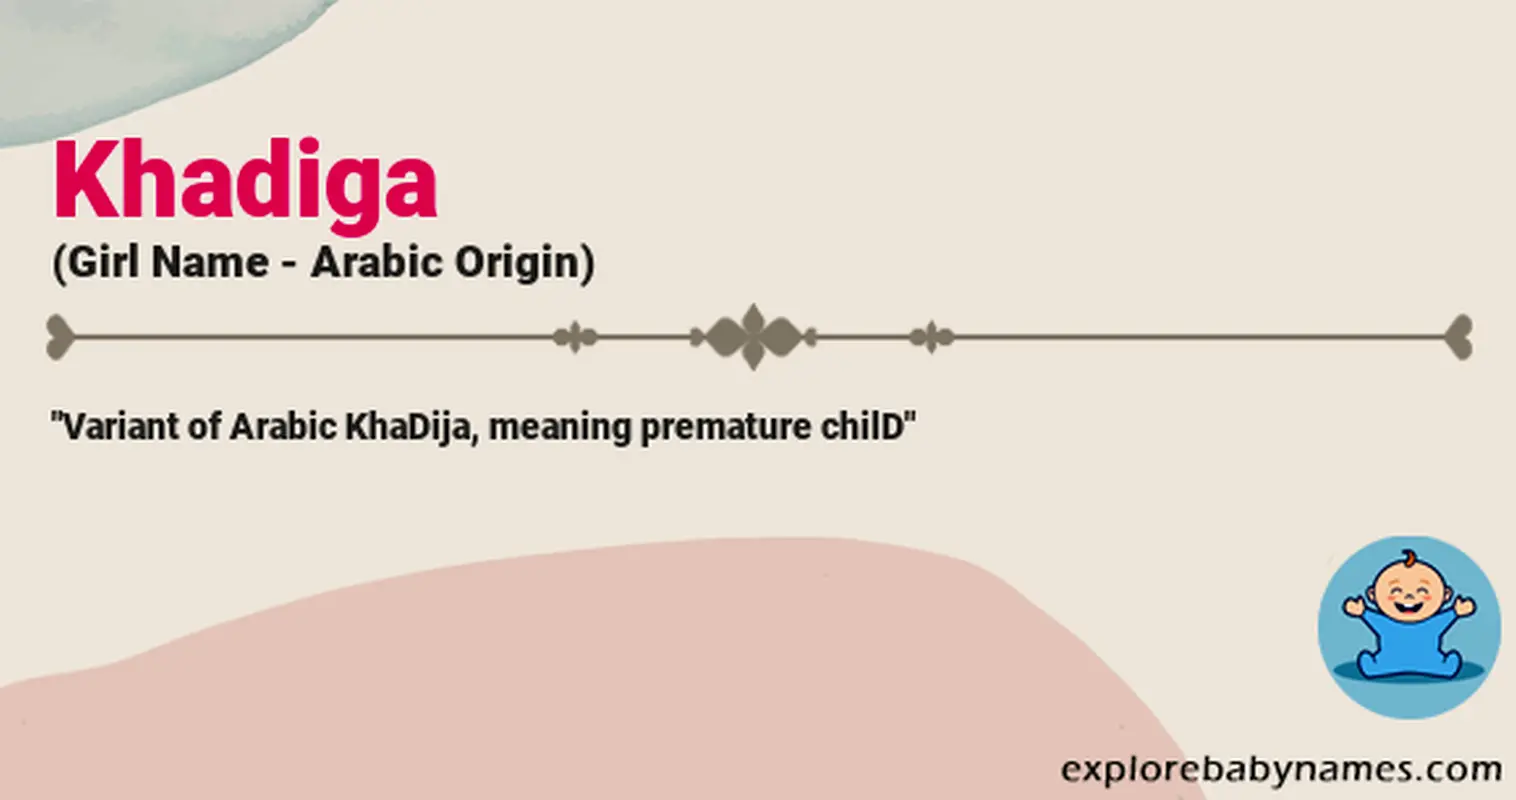 Meaning of Khadiga